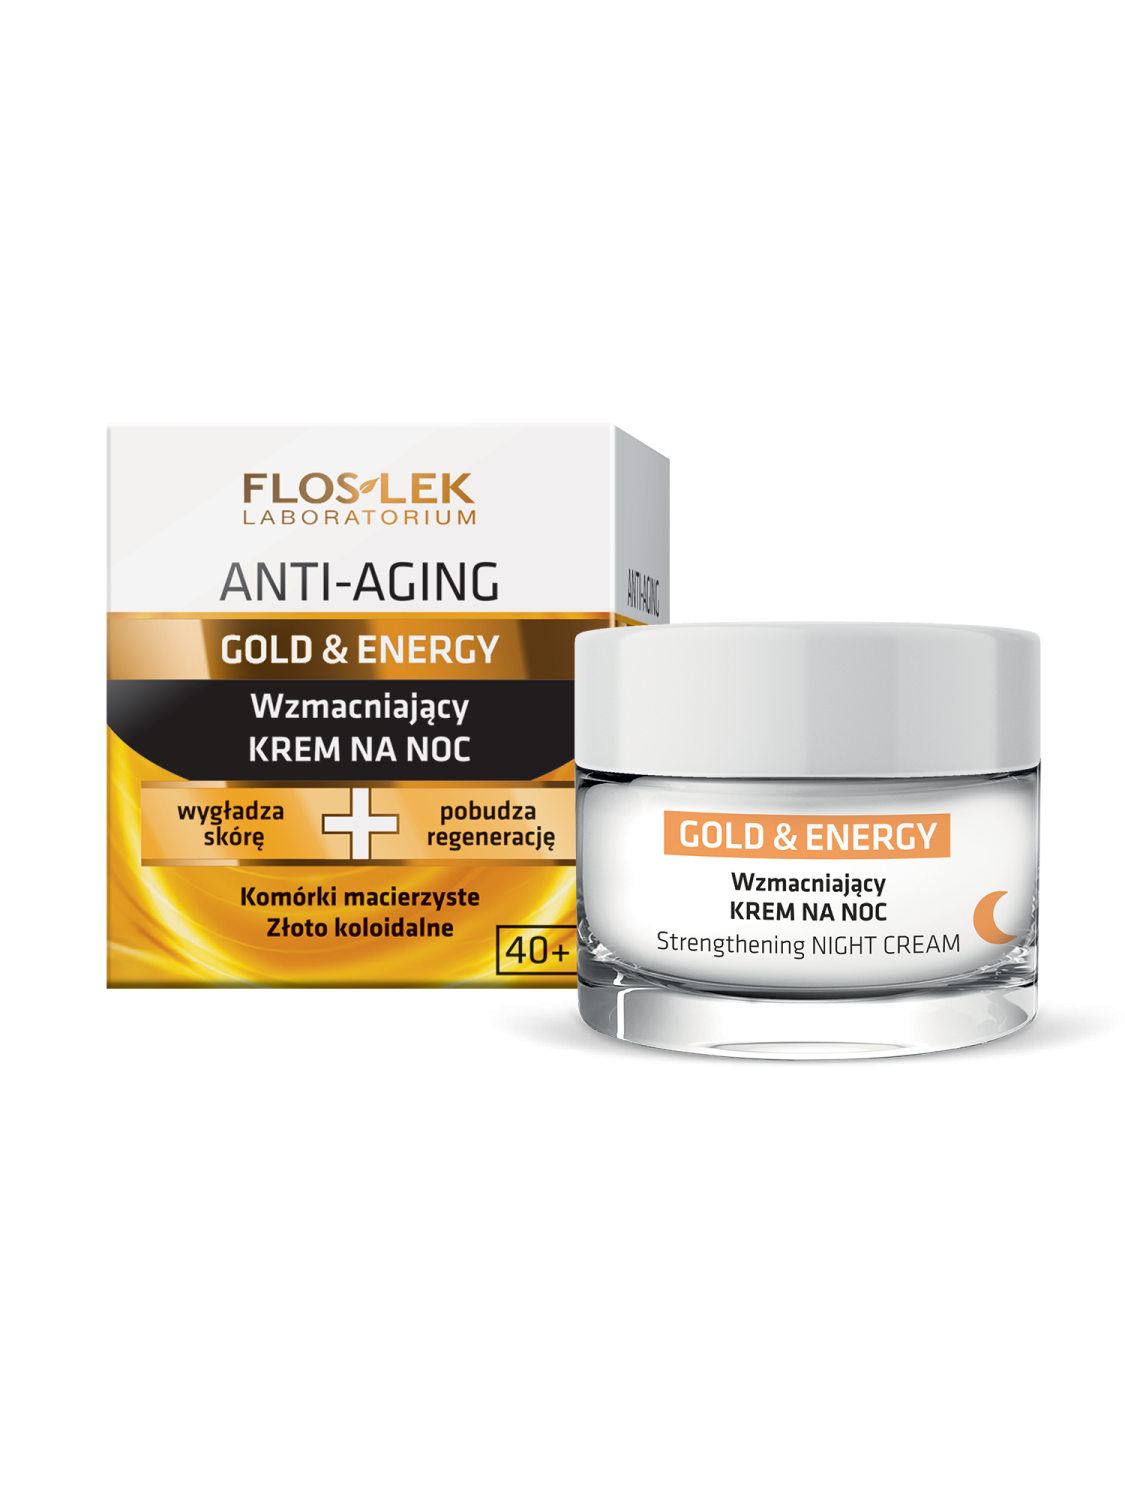 ANTI-AGING GOLD & ENERGY® Strengthening night cream - 50 ml - Floslek